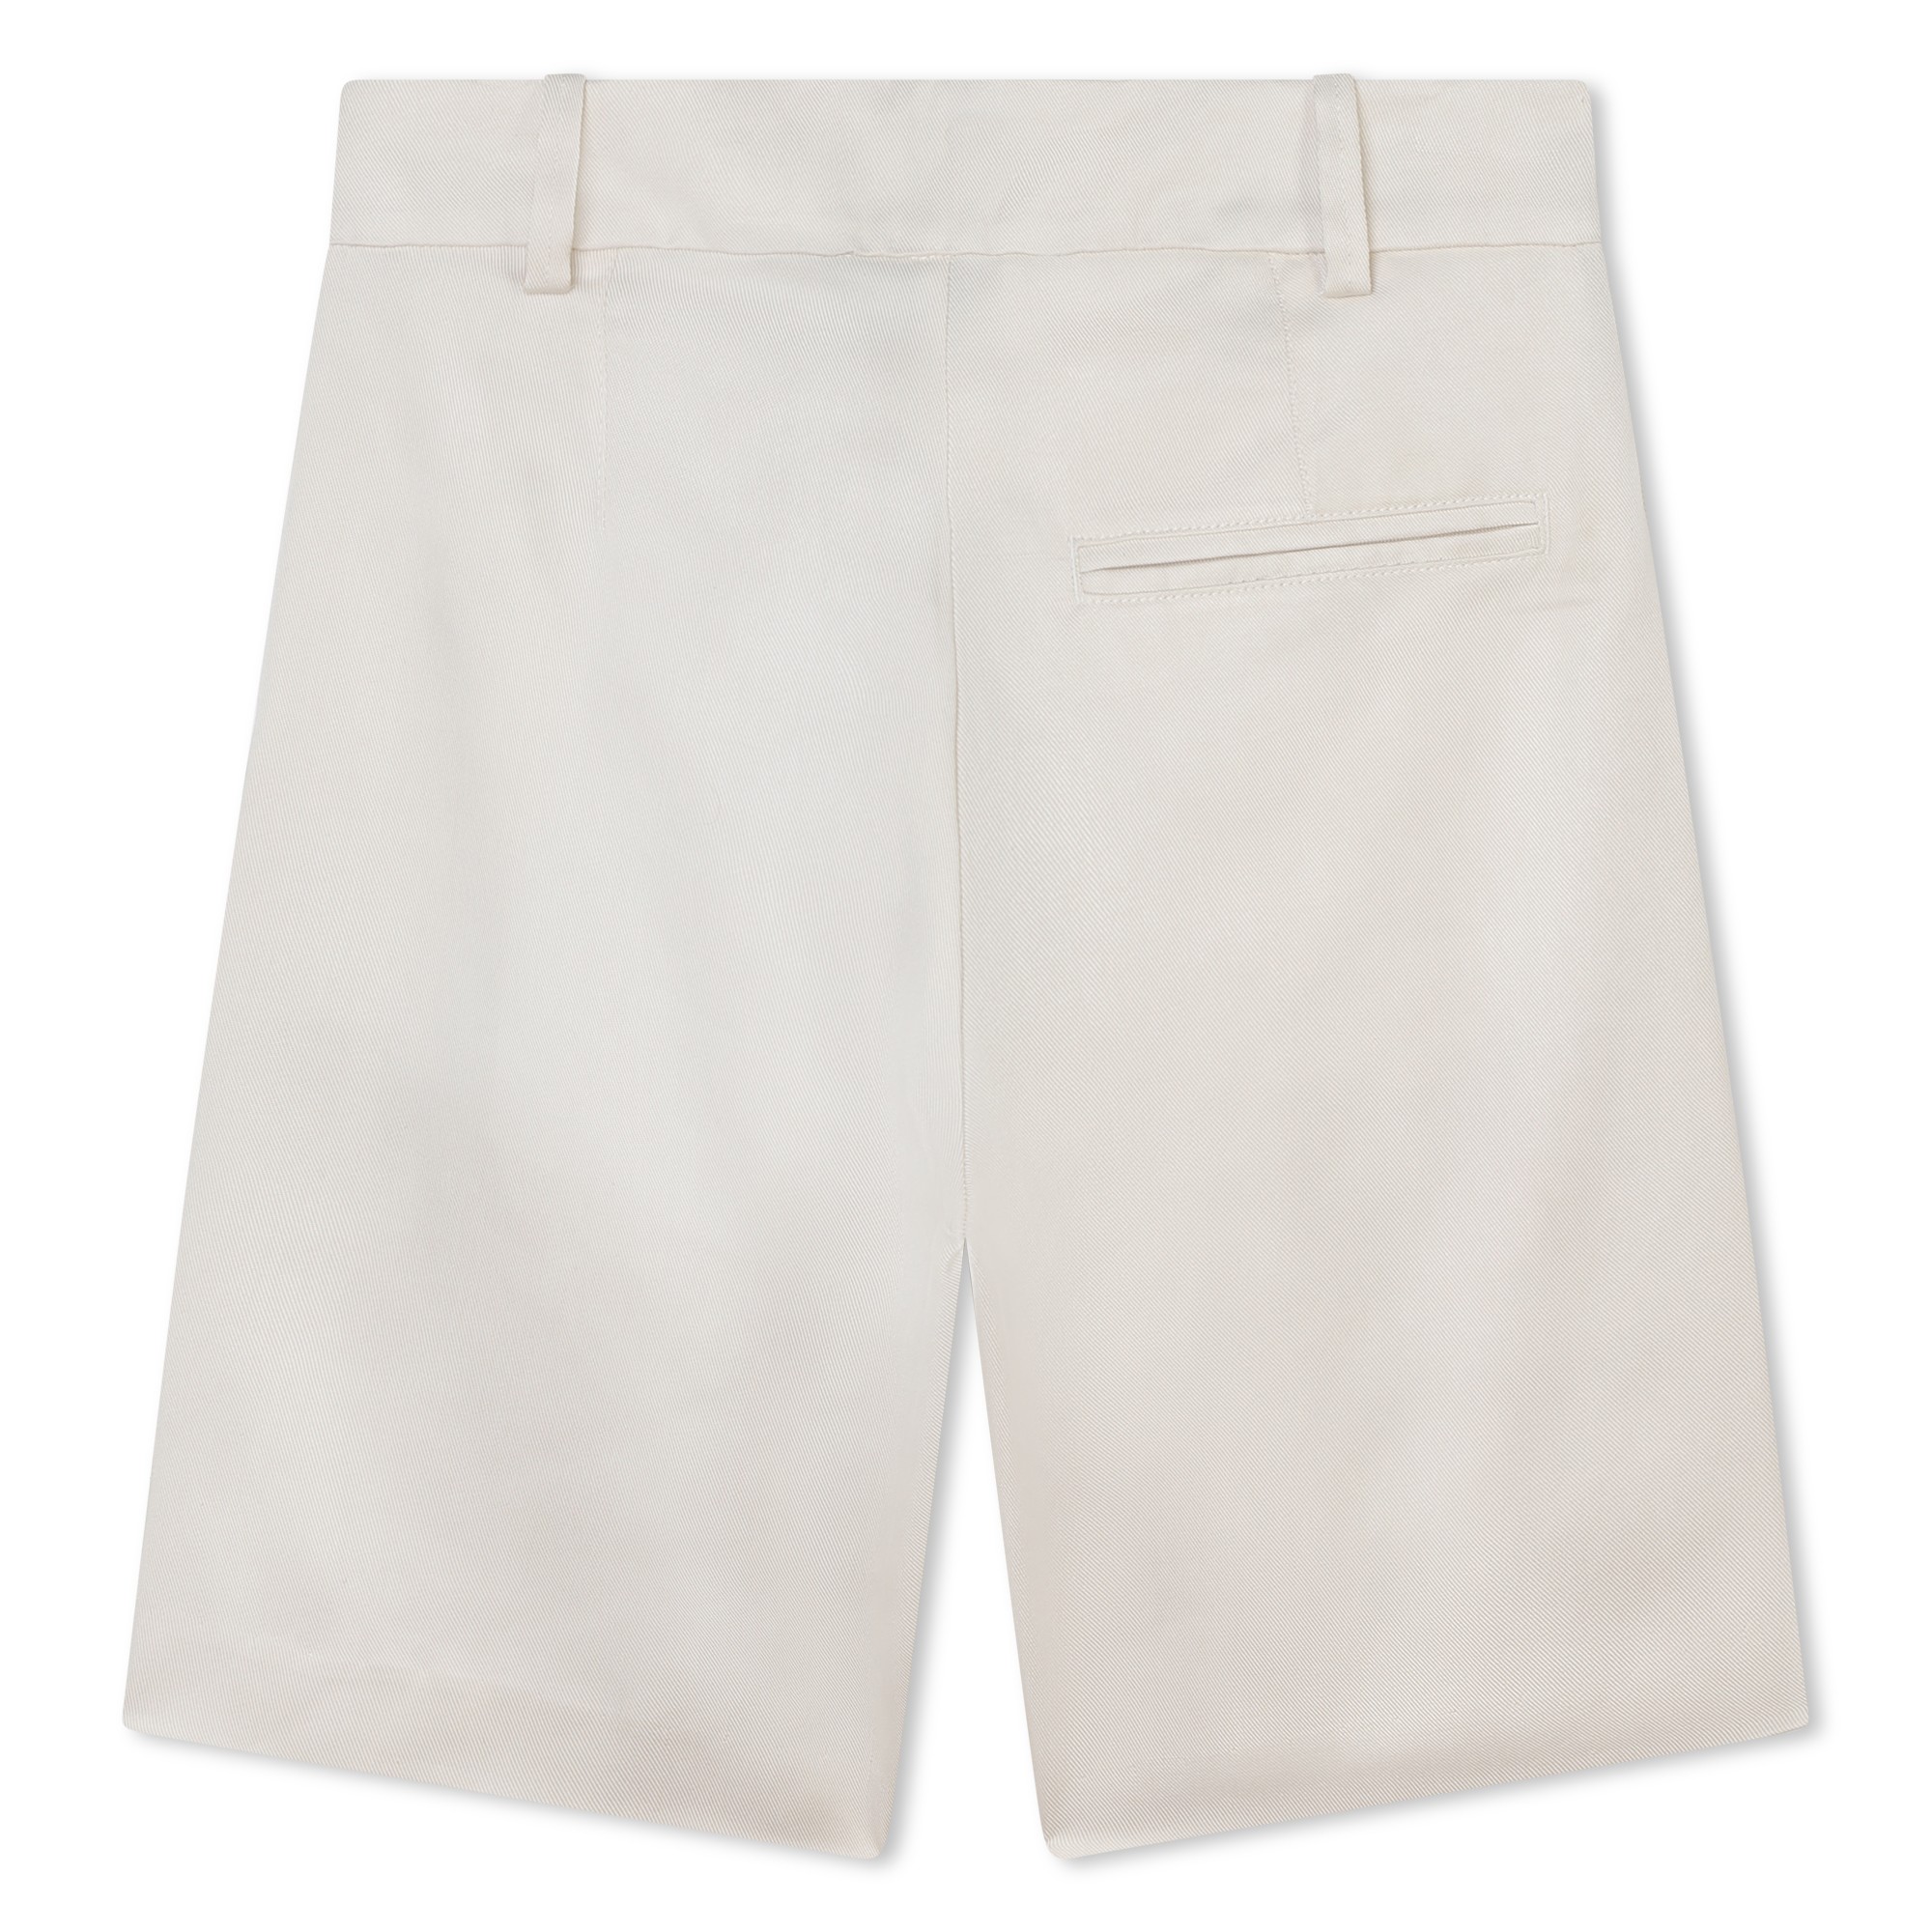 Bermuda shorts with pockets KARL LAGERFELD KIDS for BOY